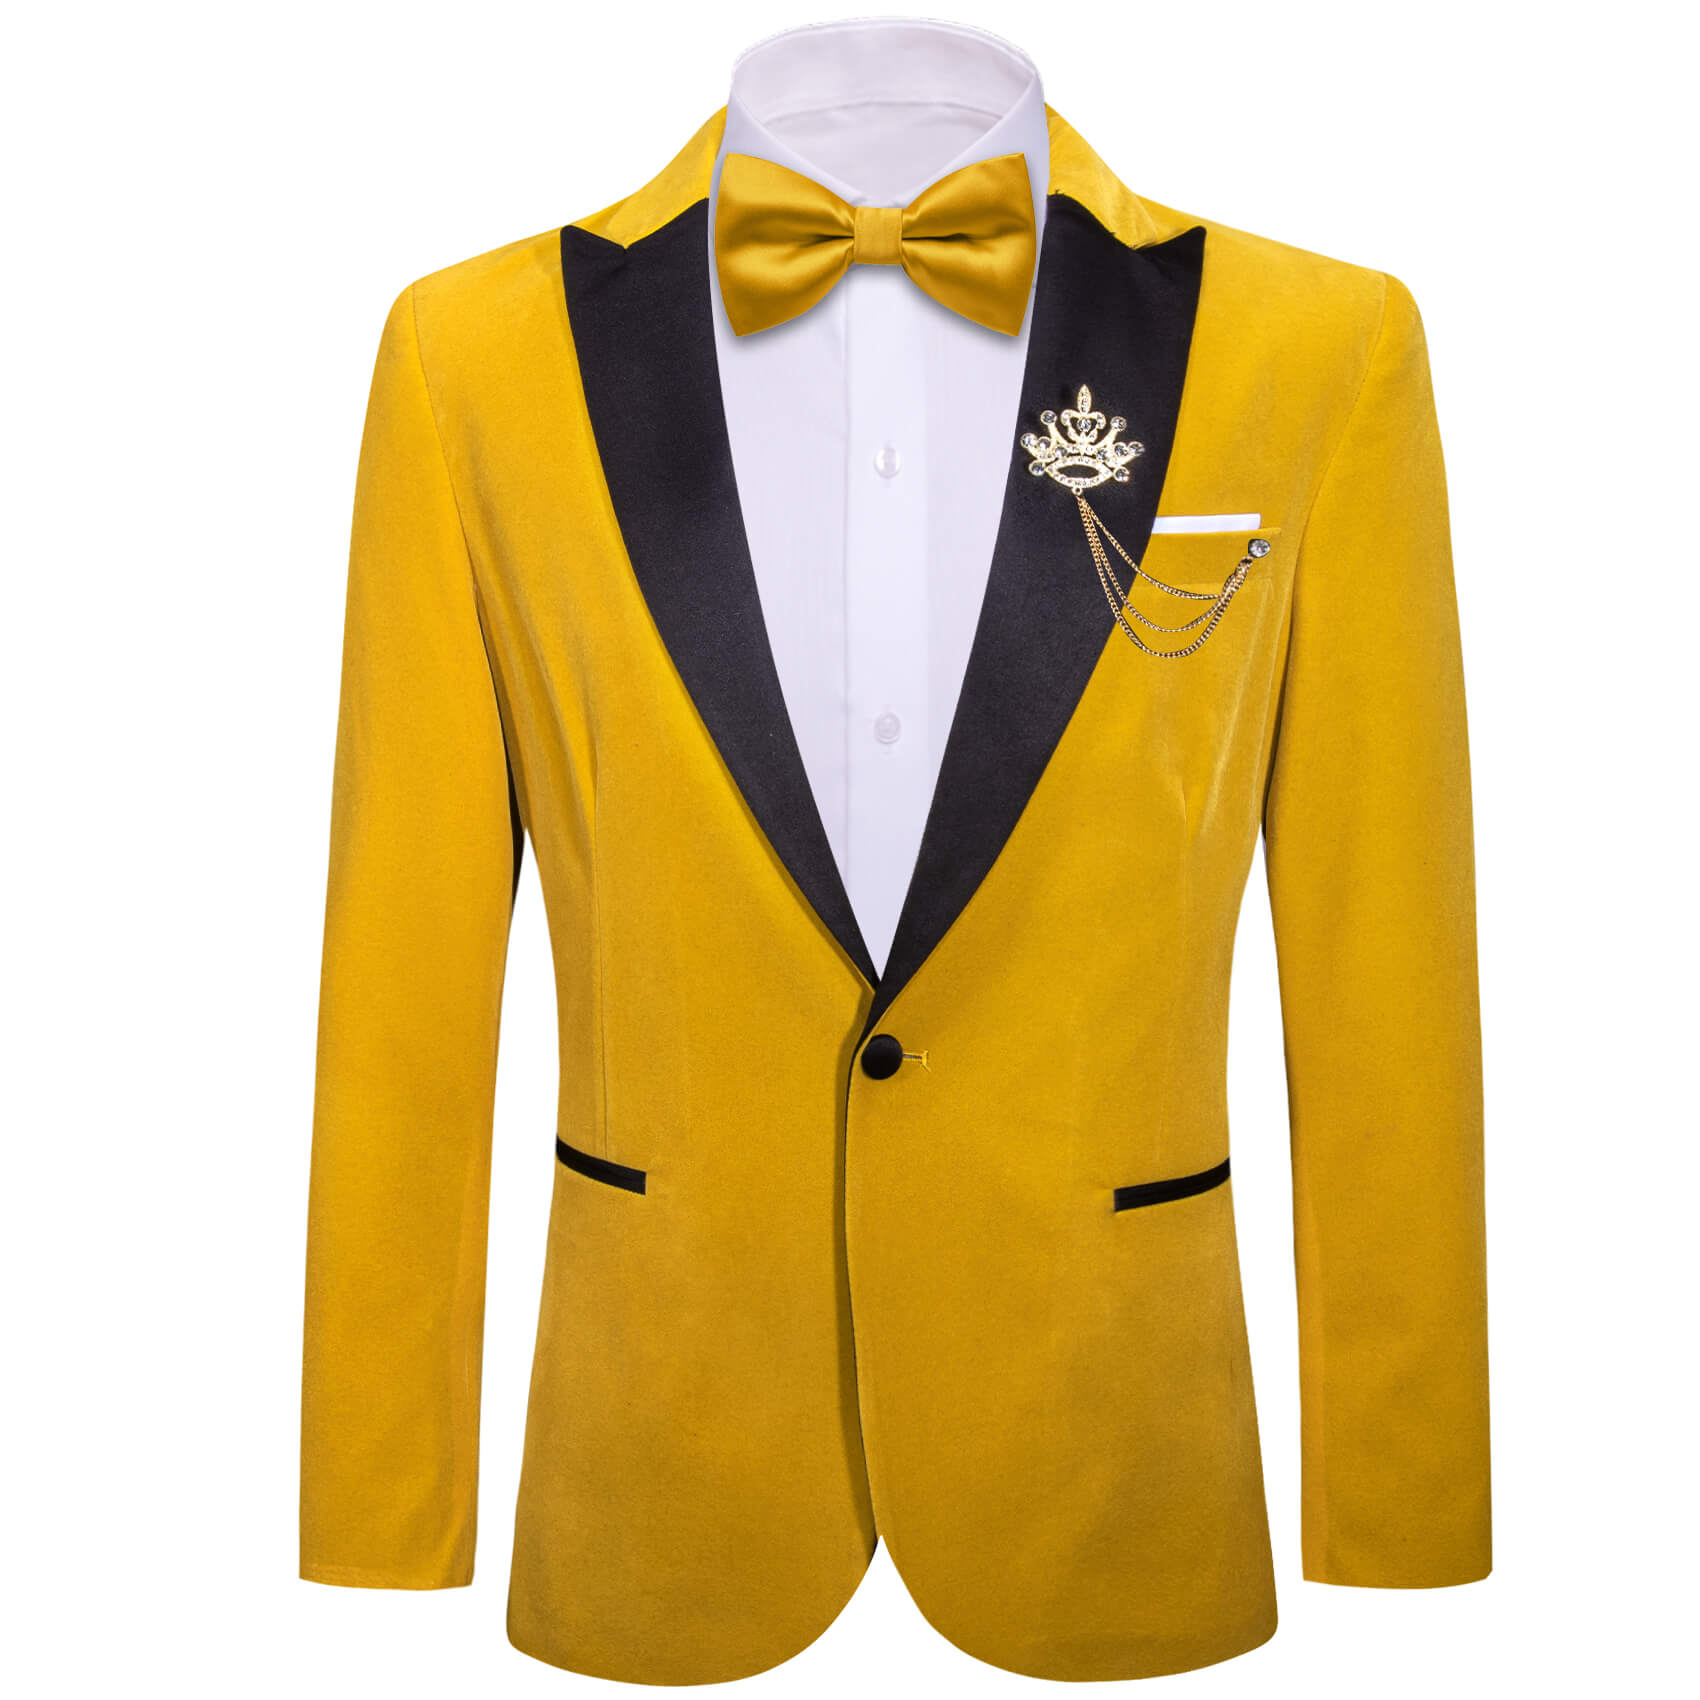 Goldenrod Yellow Solid Silk Peak Collar Suit 